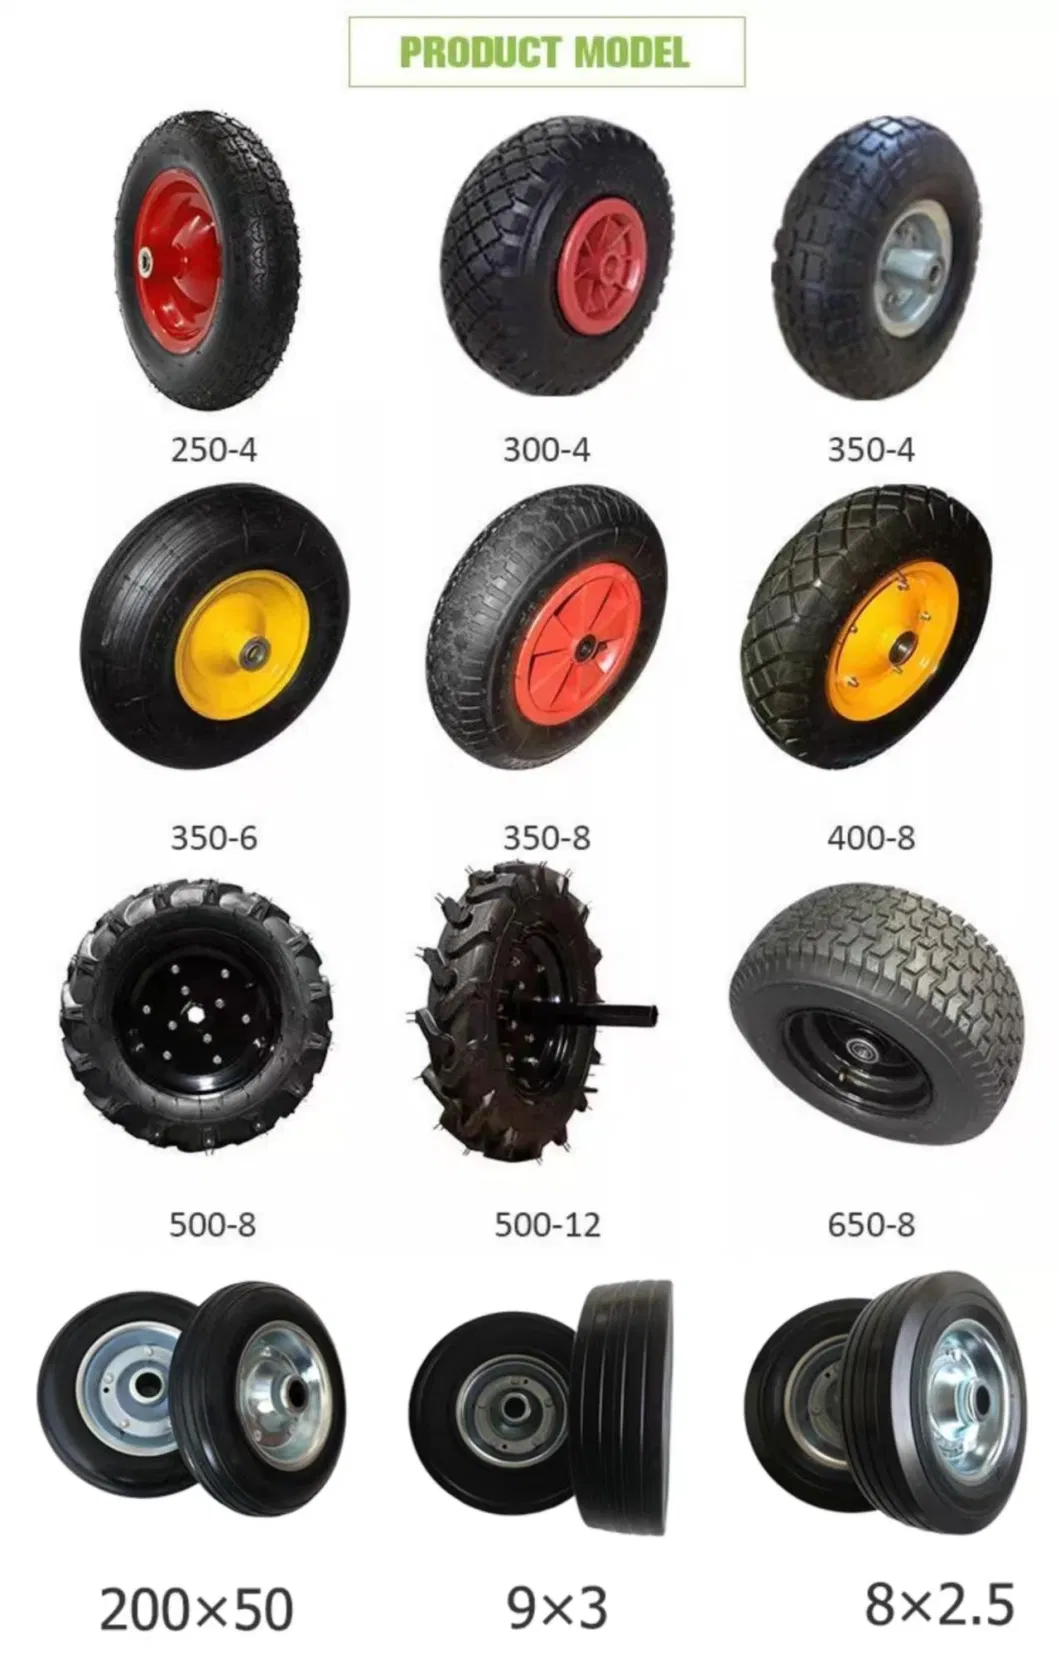 16 Inch 4.00-8 PU Foam Wheel Flat Free Wheelbarrow Tire and Wheel